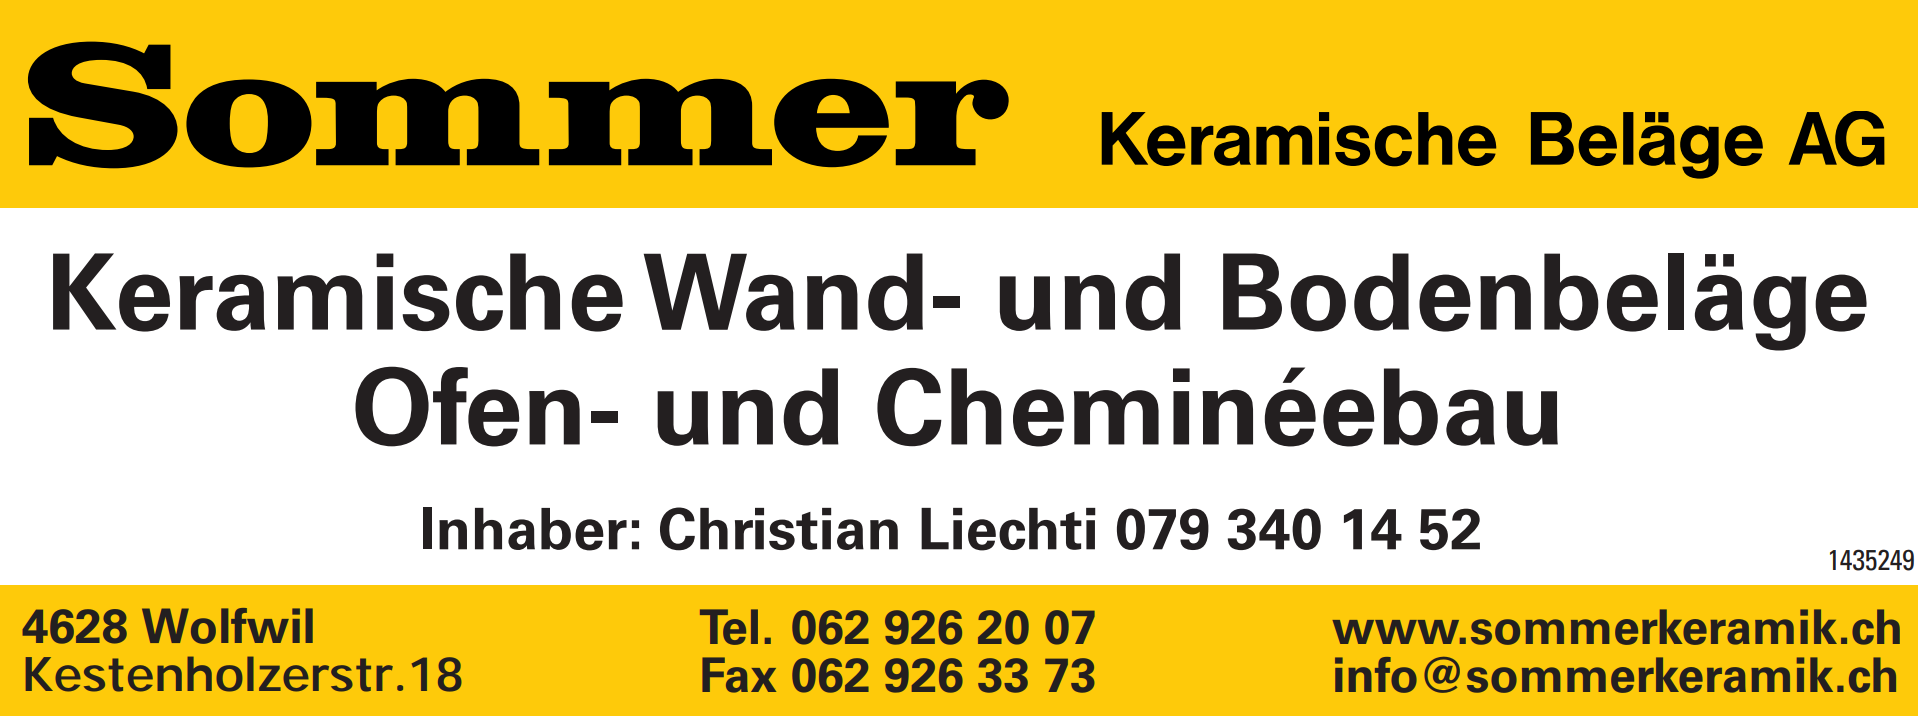 Sommer Keramische Beläge AG, Wolfwil